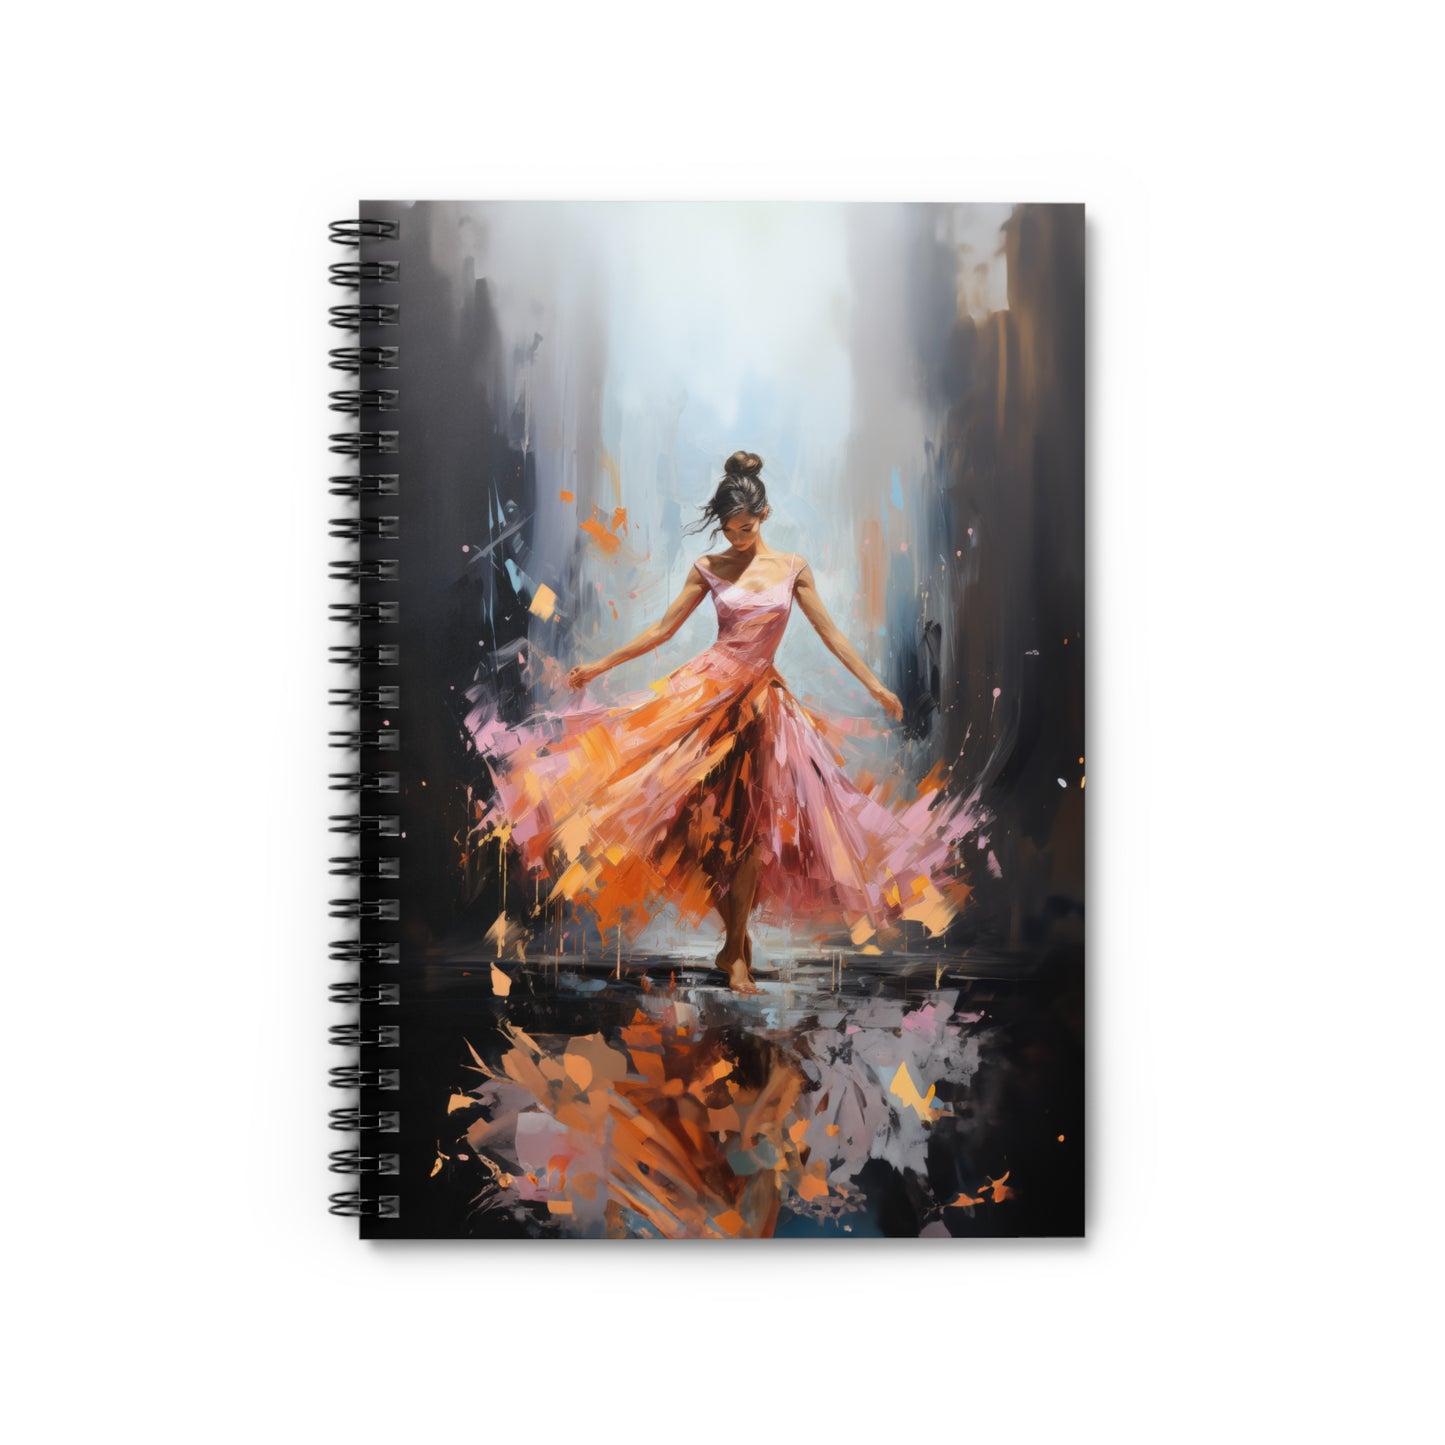 Swirling Splendor: Ballerina in Orange and Pink Dress Dancing Amidst the Reflecting Rain Print - Spiral Notebook Ruled Line 6"x8"